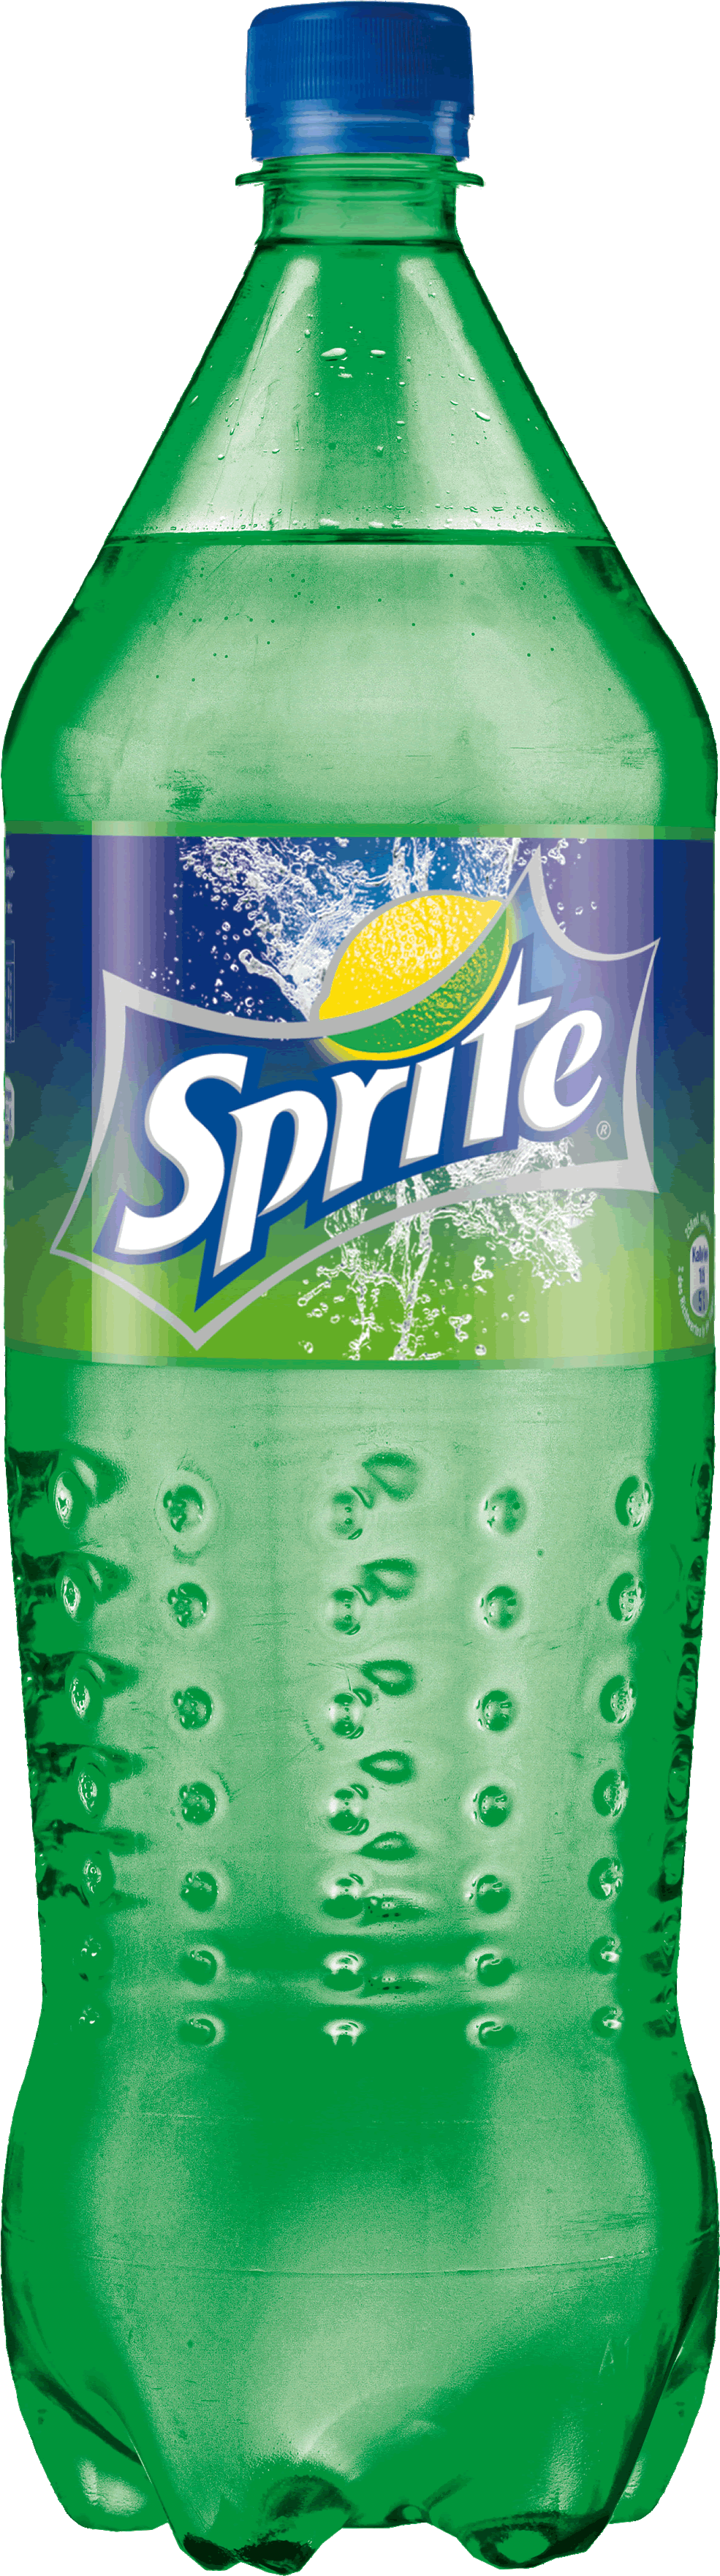 Sprite bottle PNG images, sprite can PNG image.